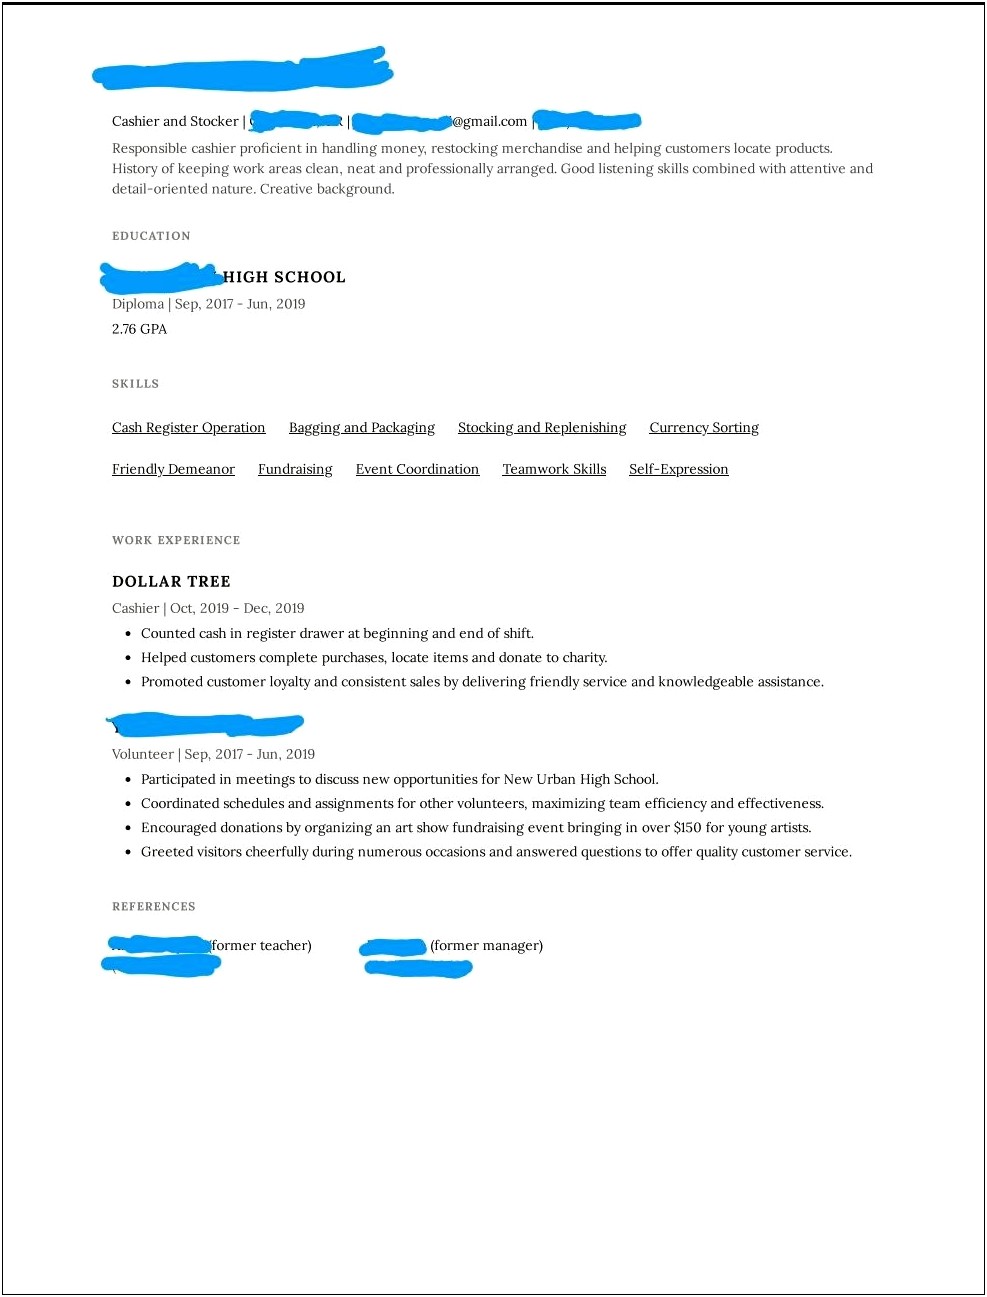 Dollar Tree Merchandising Manager Resume